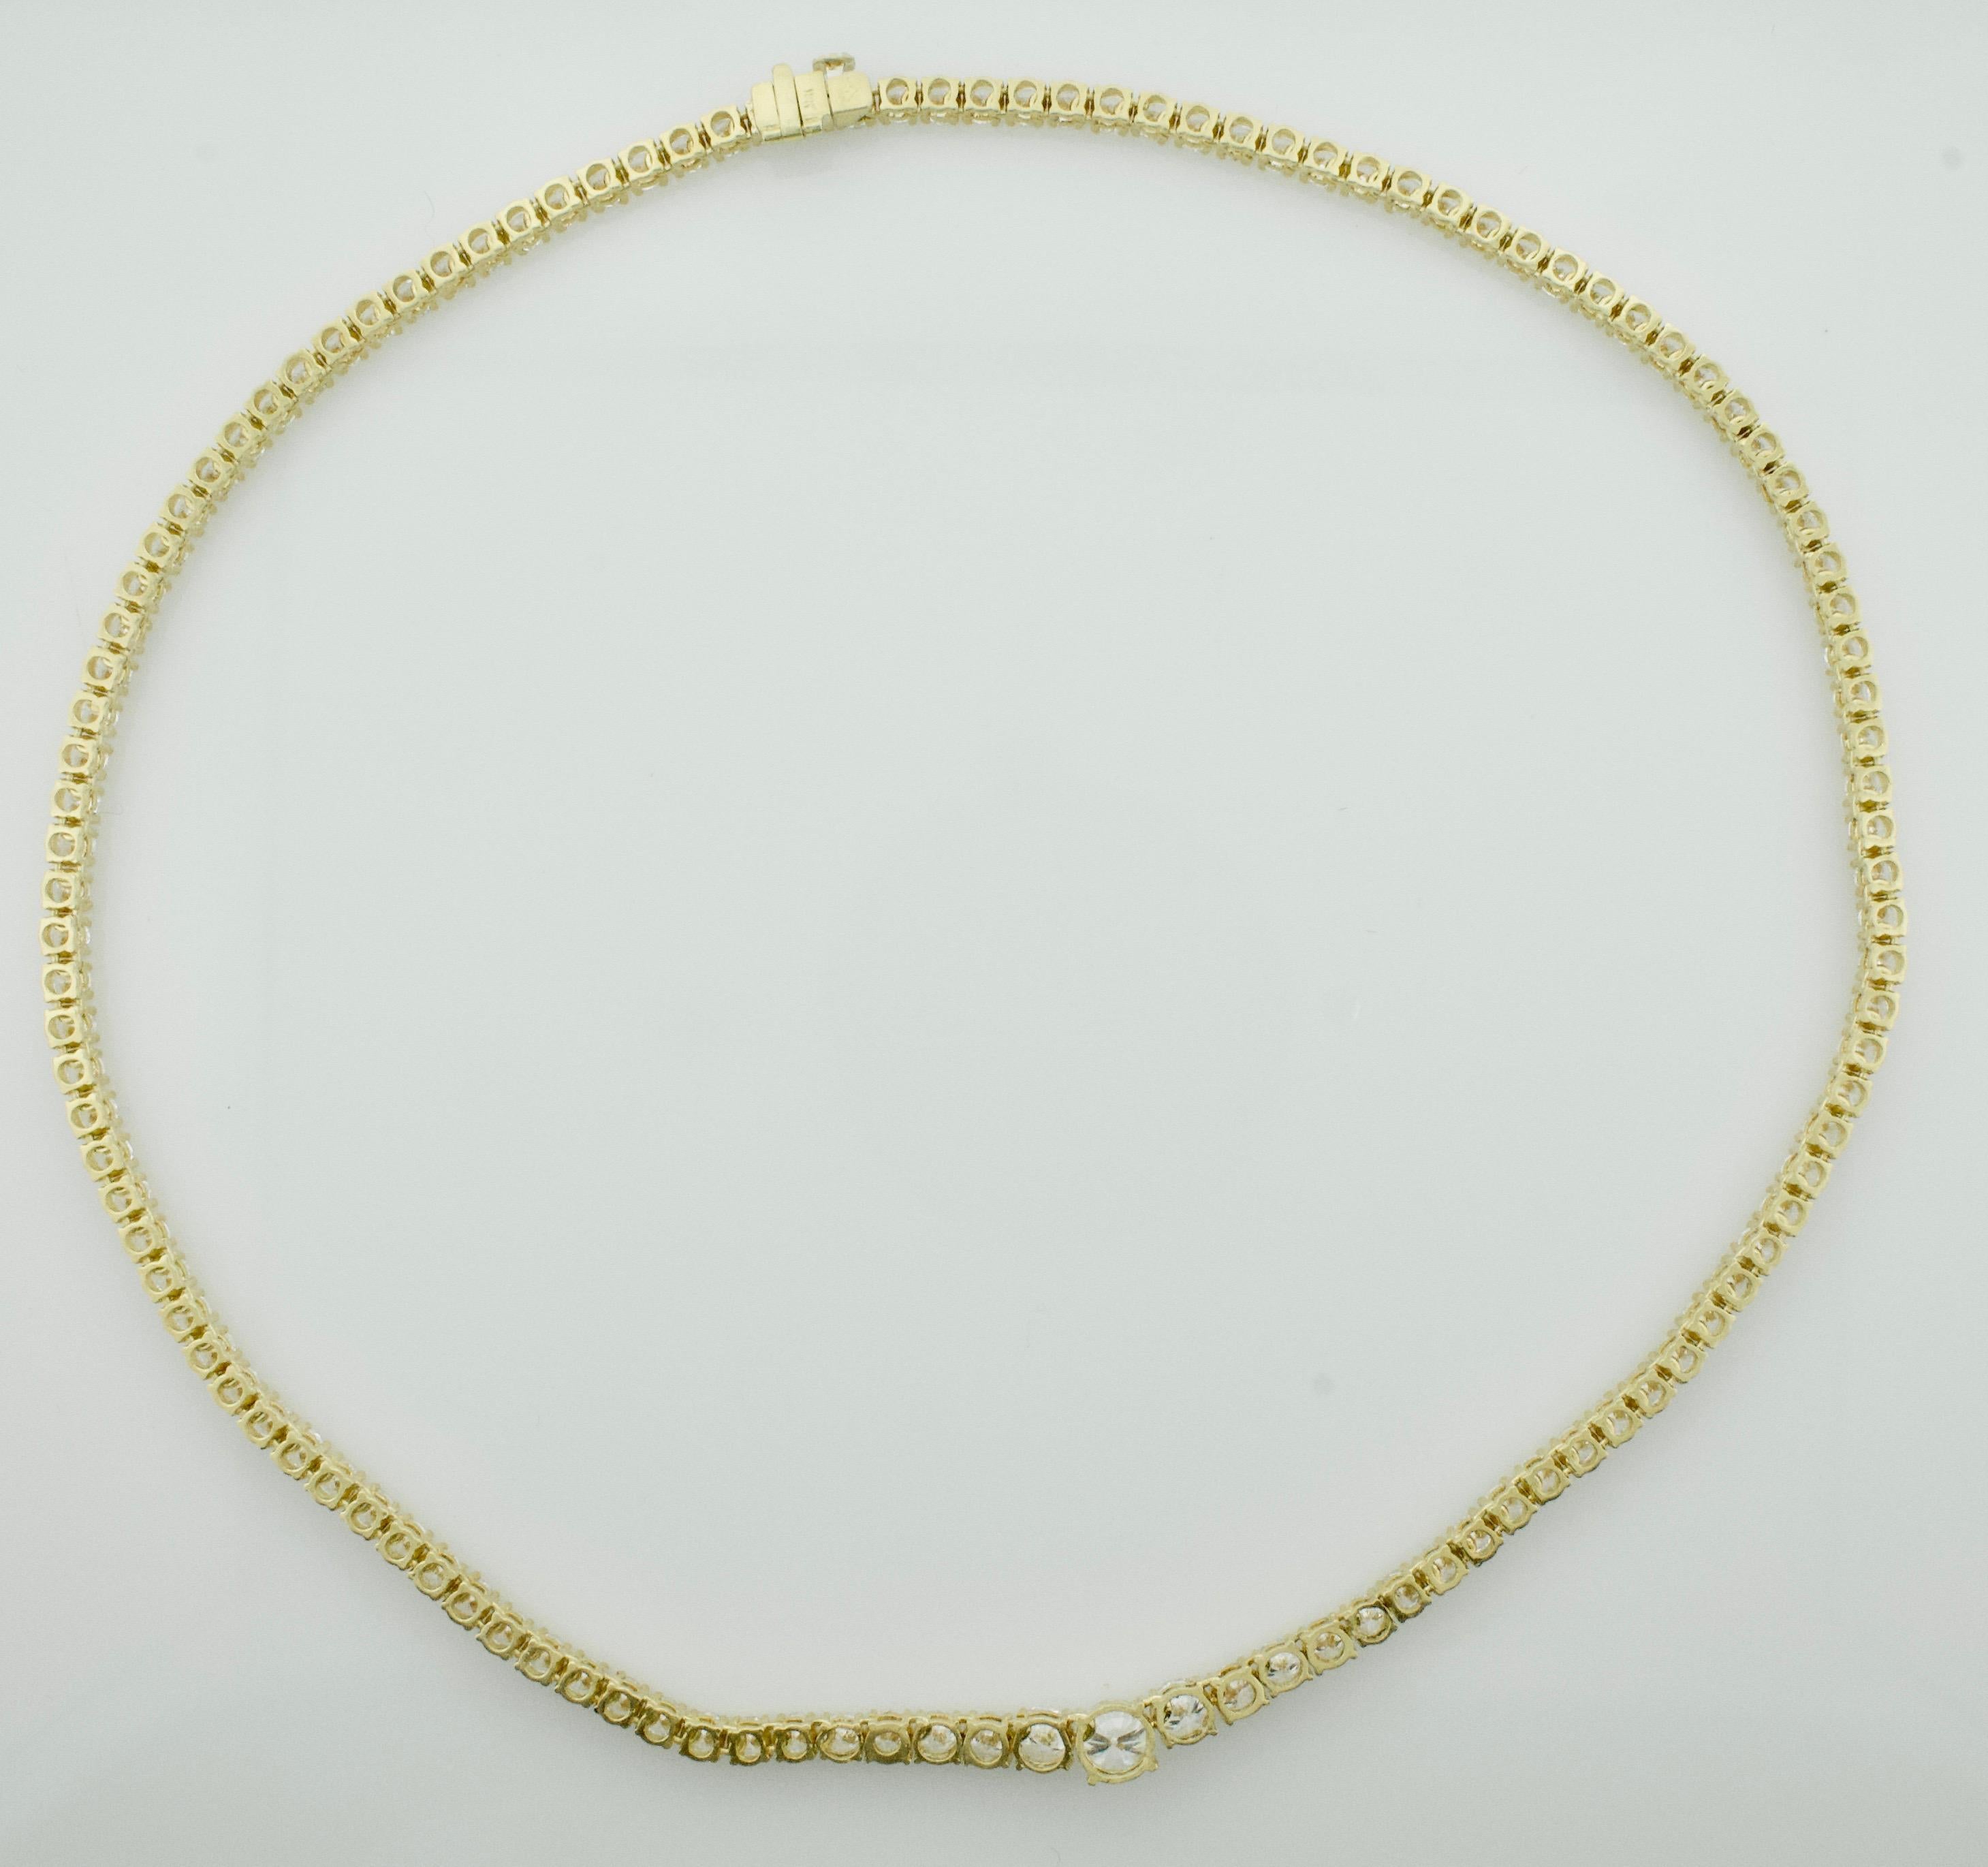 Quintessential Diamond Riviére Straight Line Graduated Diamond Necklace in 18k 1